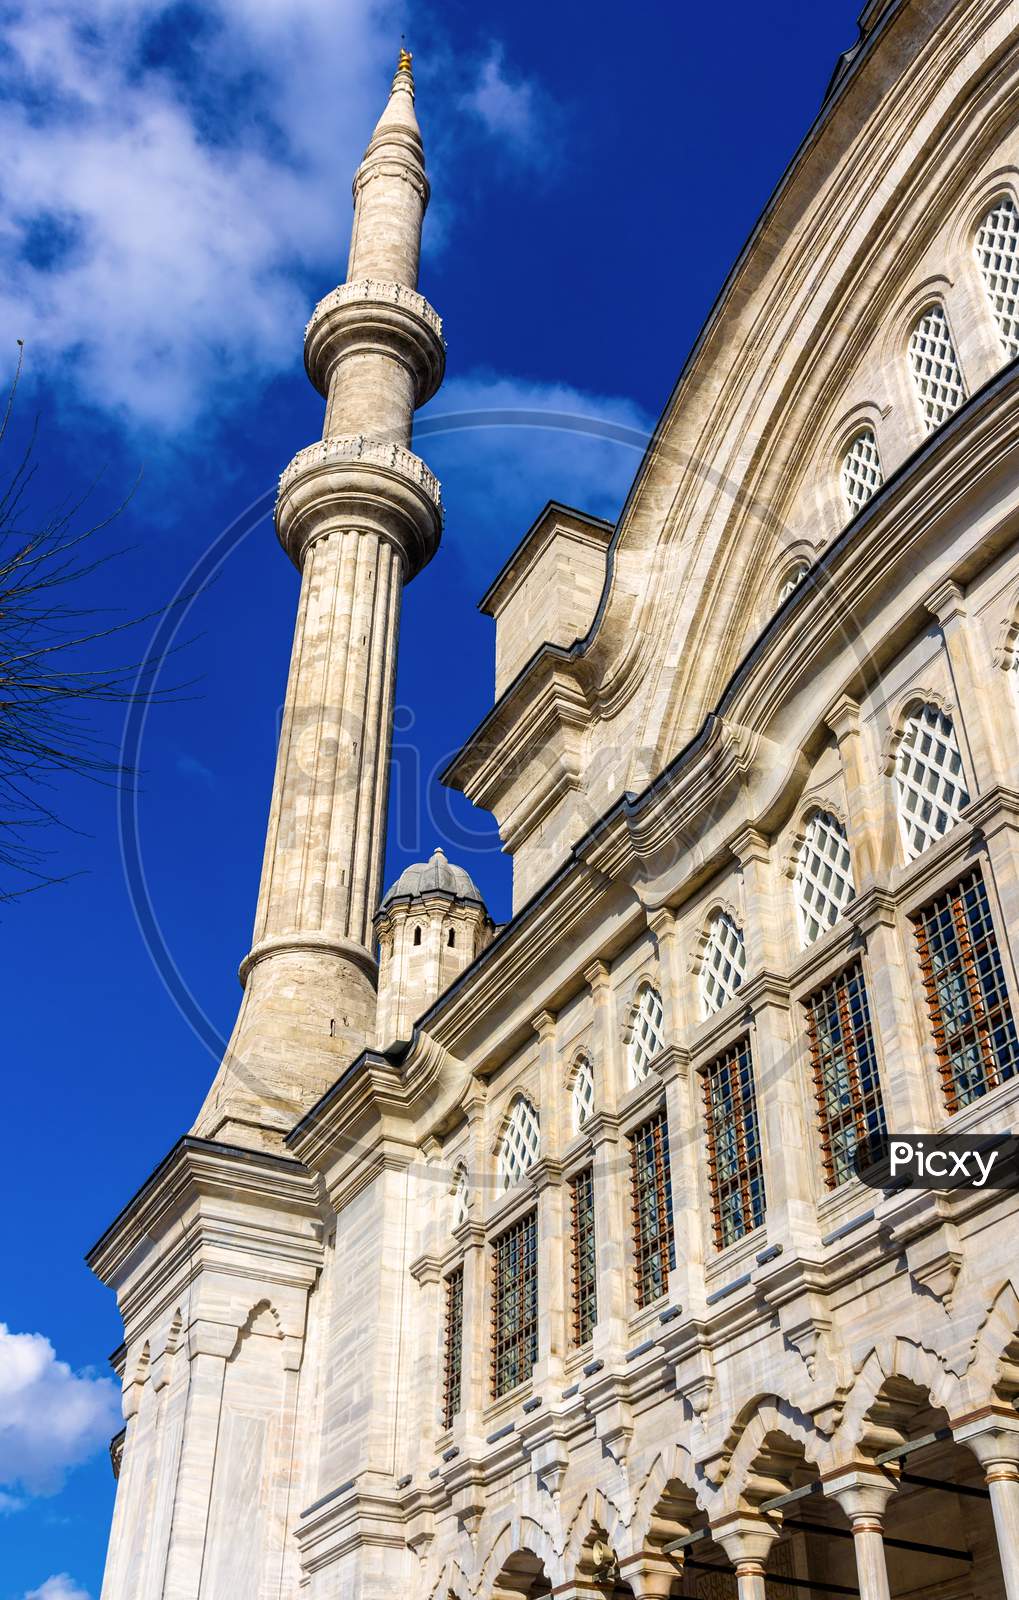 Facade Of The Nuruosmaniye Mosque In Istanbul - Turkey